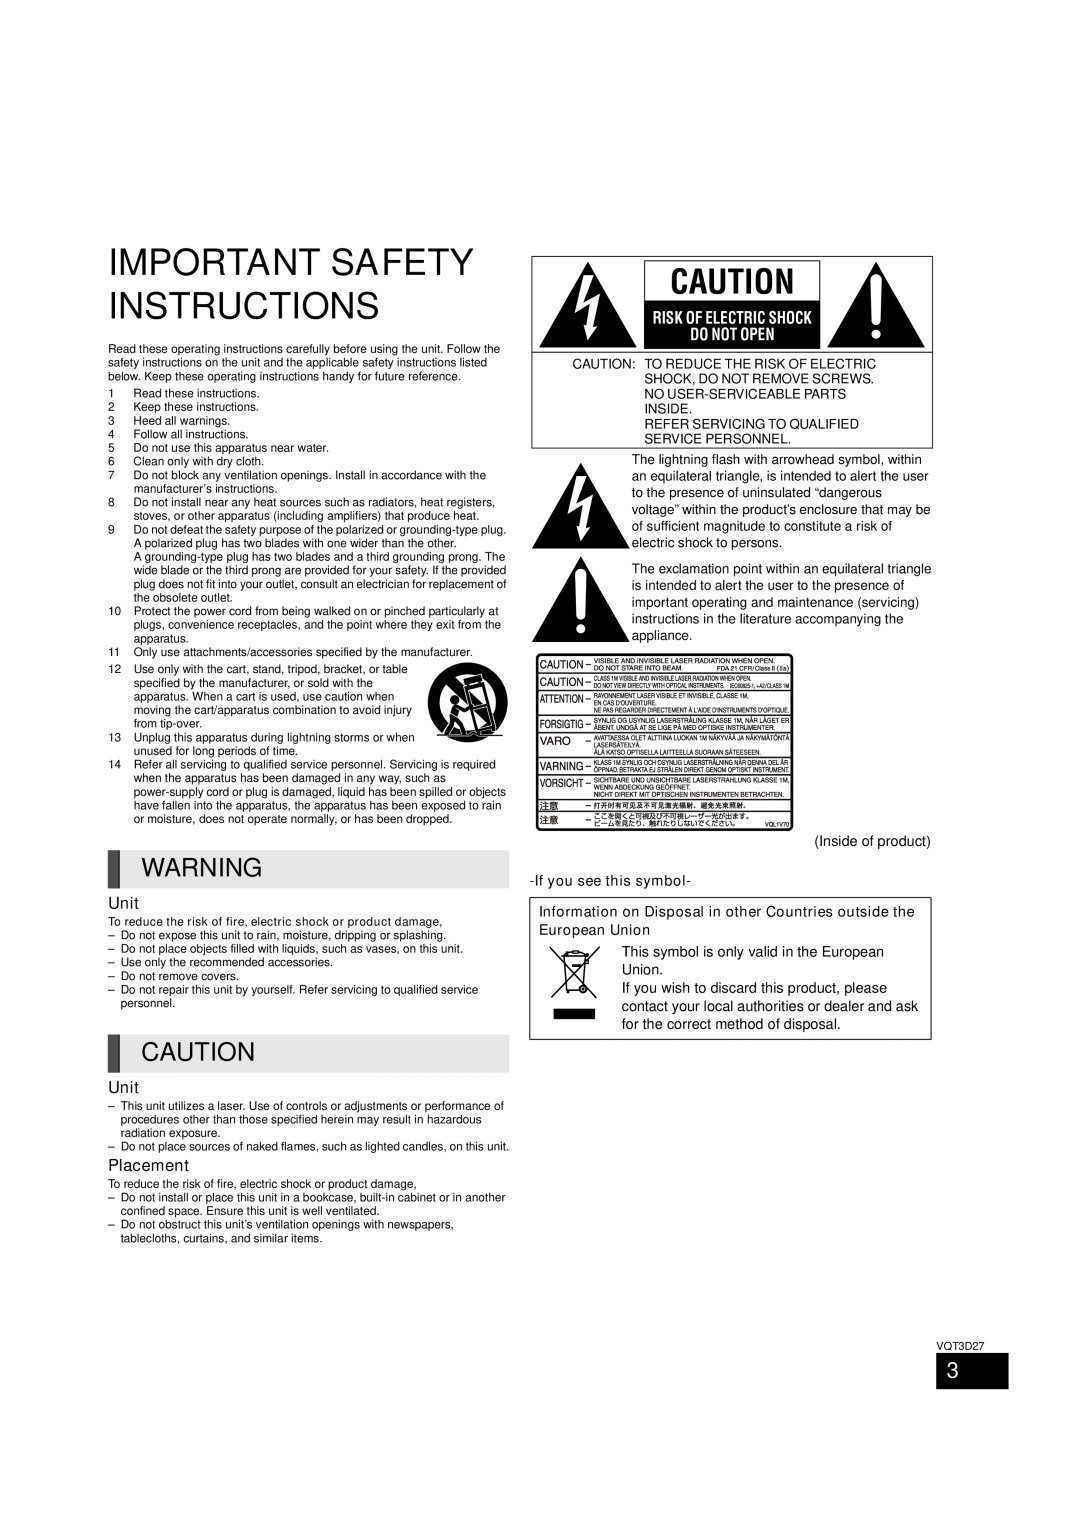 Panasonic BTT273, SC-BTT770, SC-BTT370 Important Safety Instructions, Unit, Placement, Risk Of Electric Shock Do Not Open 